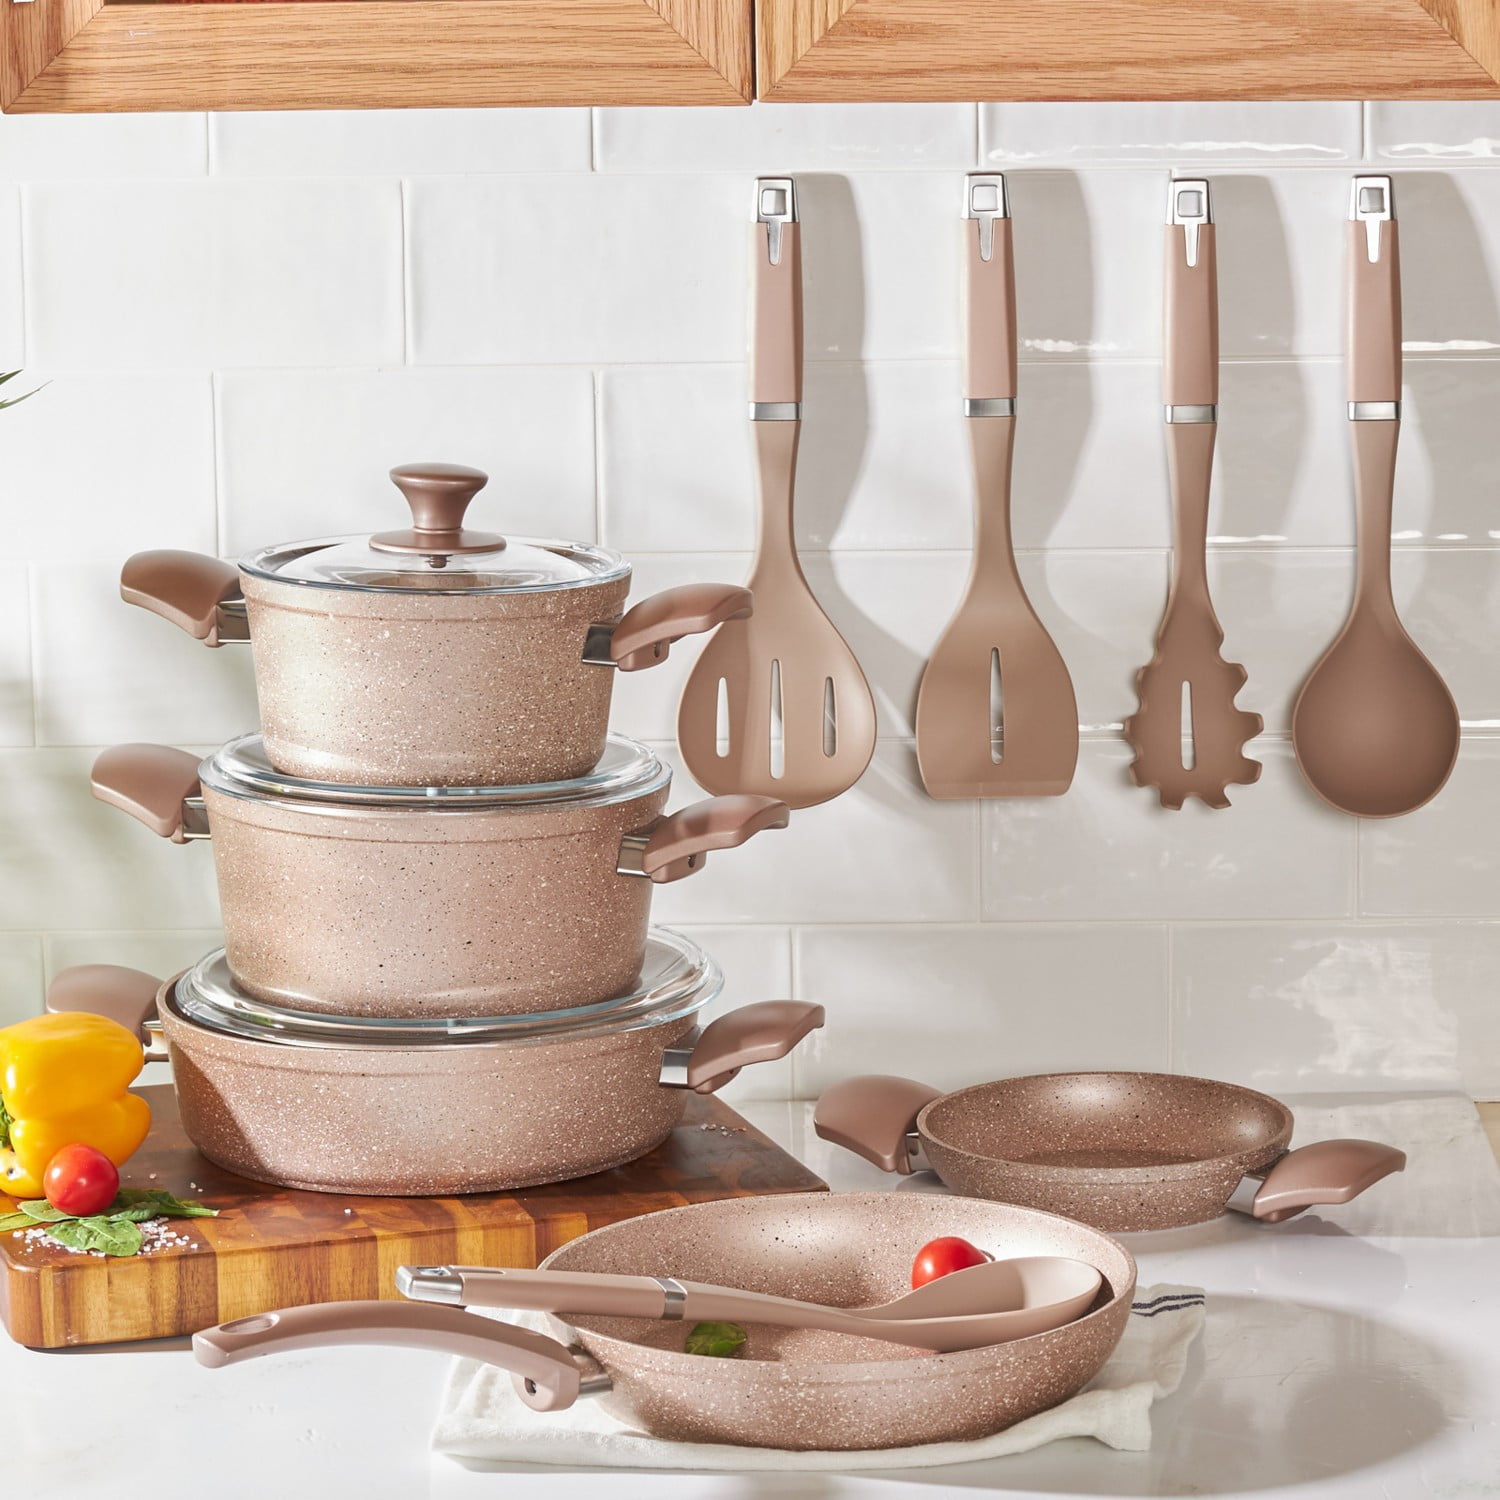 KARACA BioGranite Rosegold New 10 Pieces Cookware Set Induction